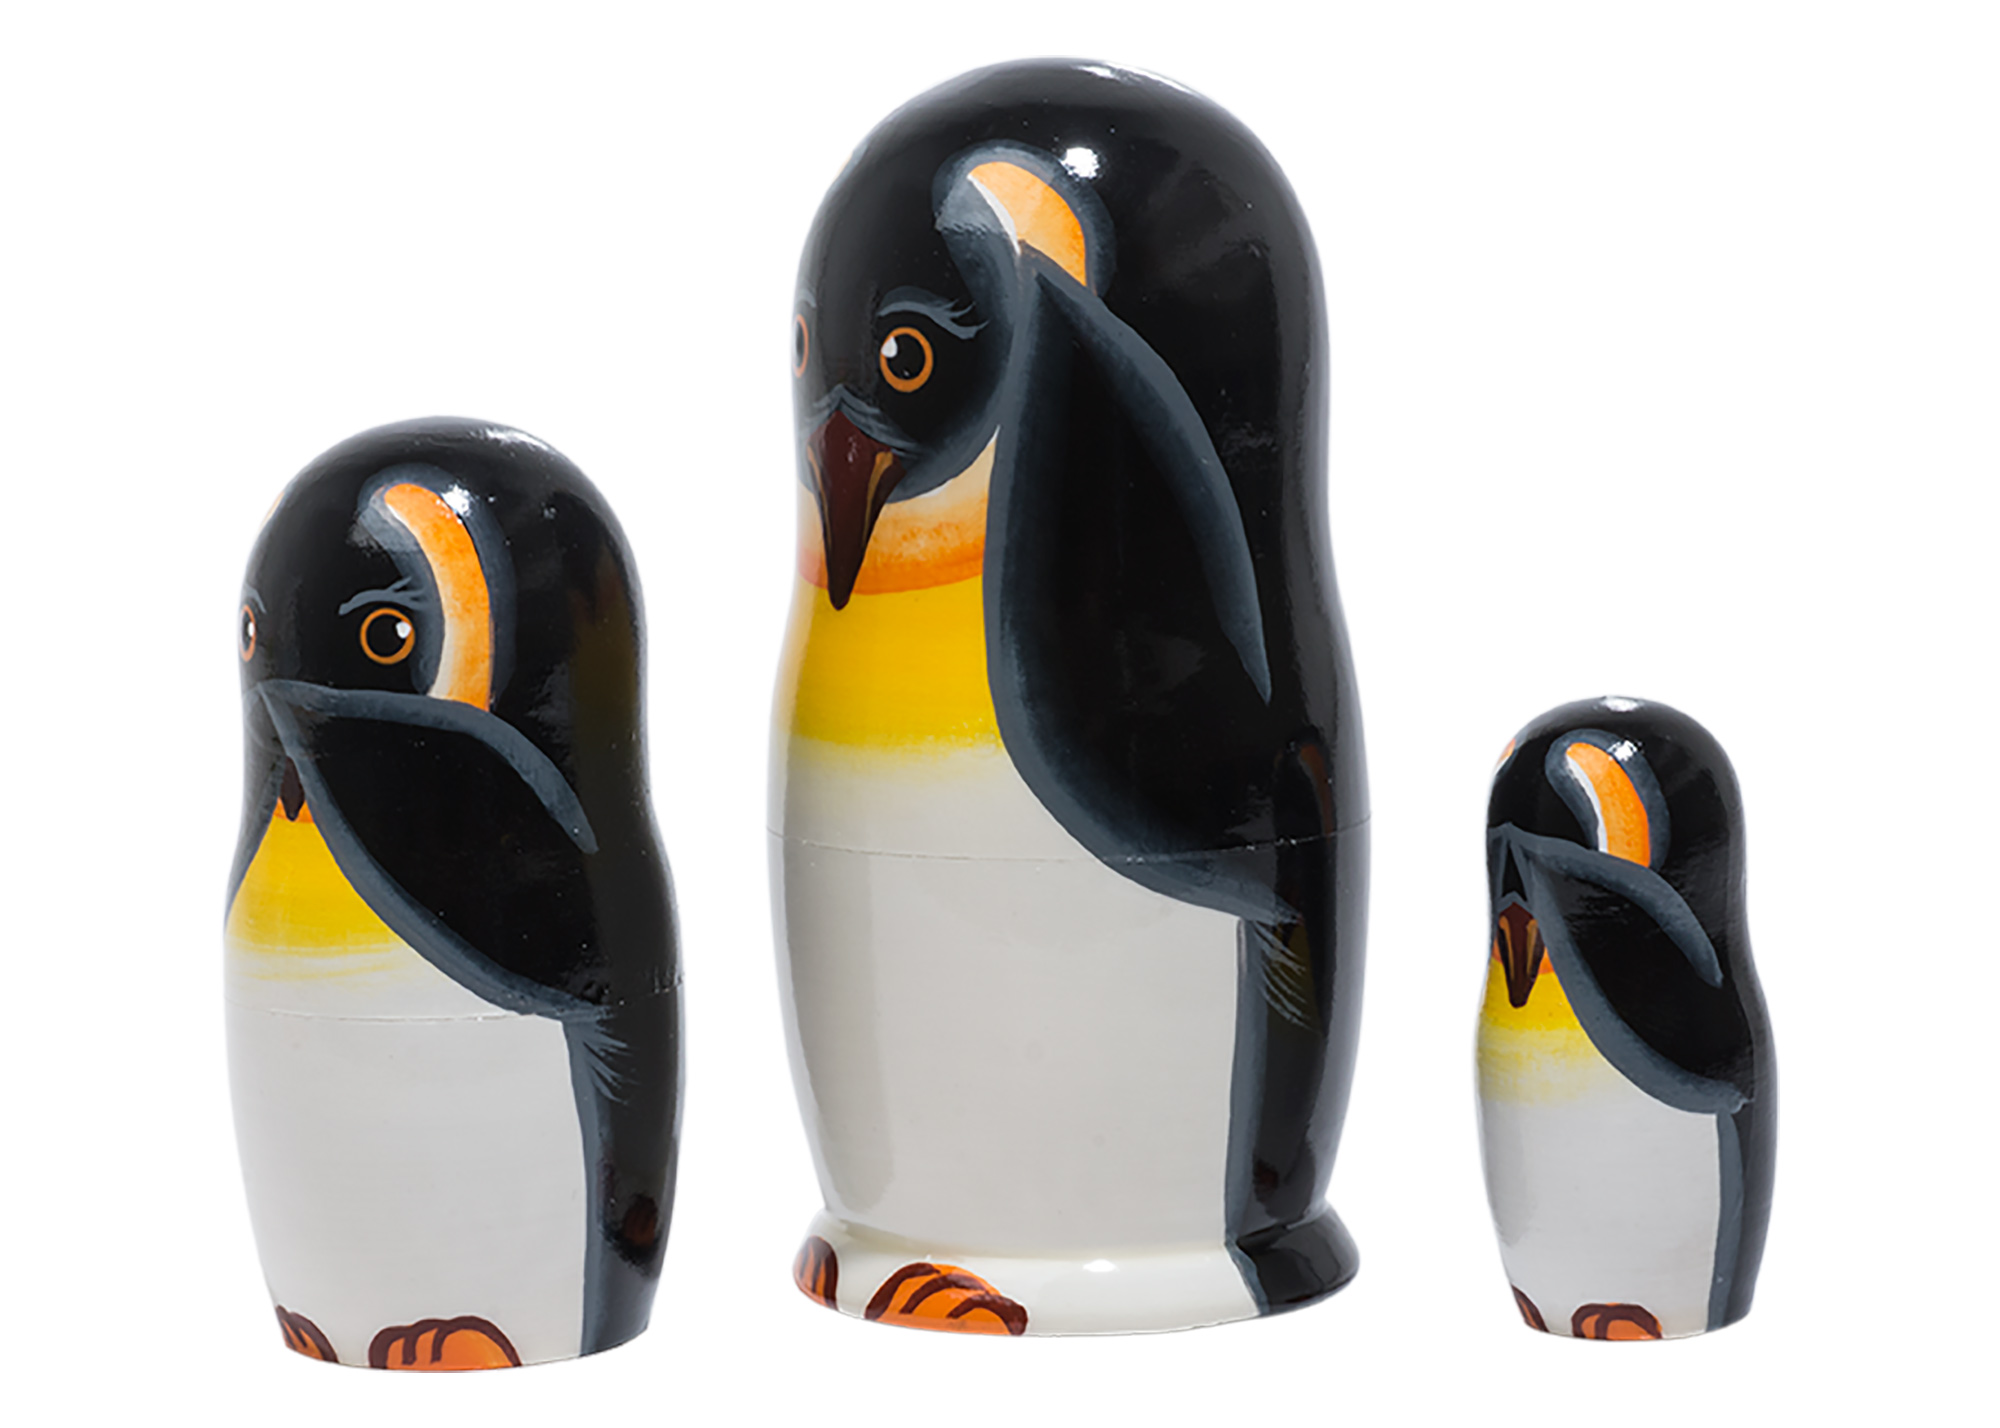 Buy Матрешка "Три пингвина" 3 места 10 см at GoldenCockerel.com